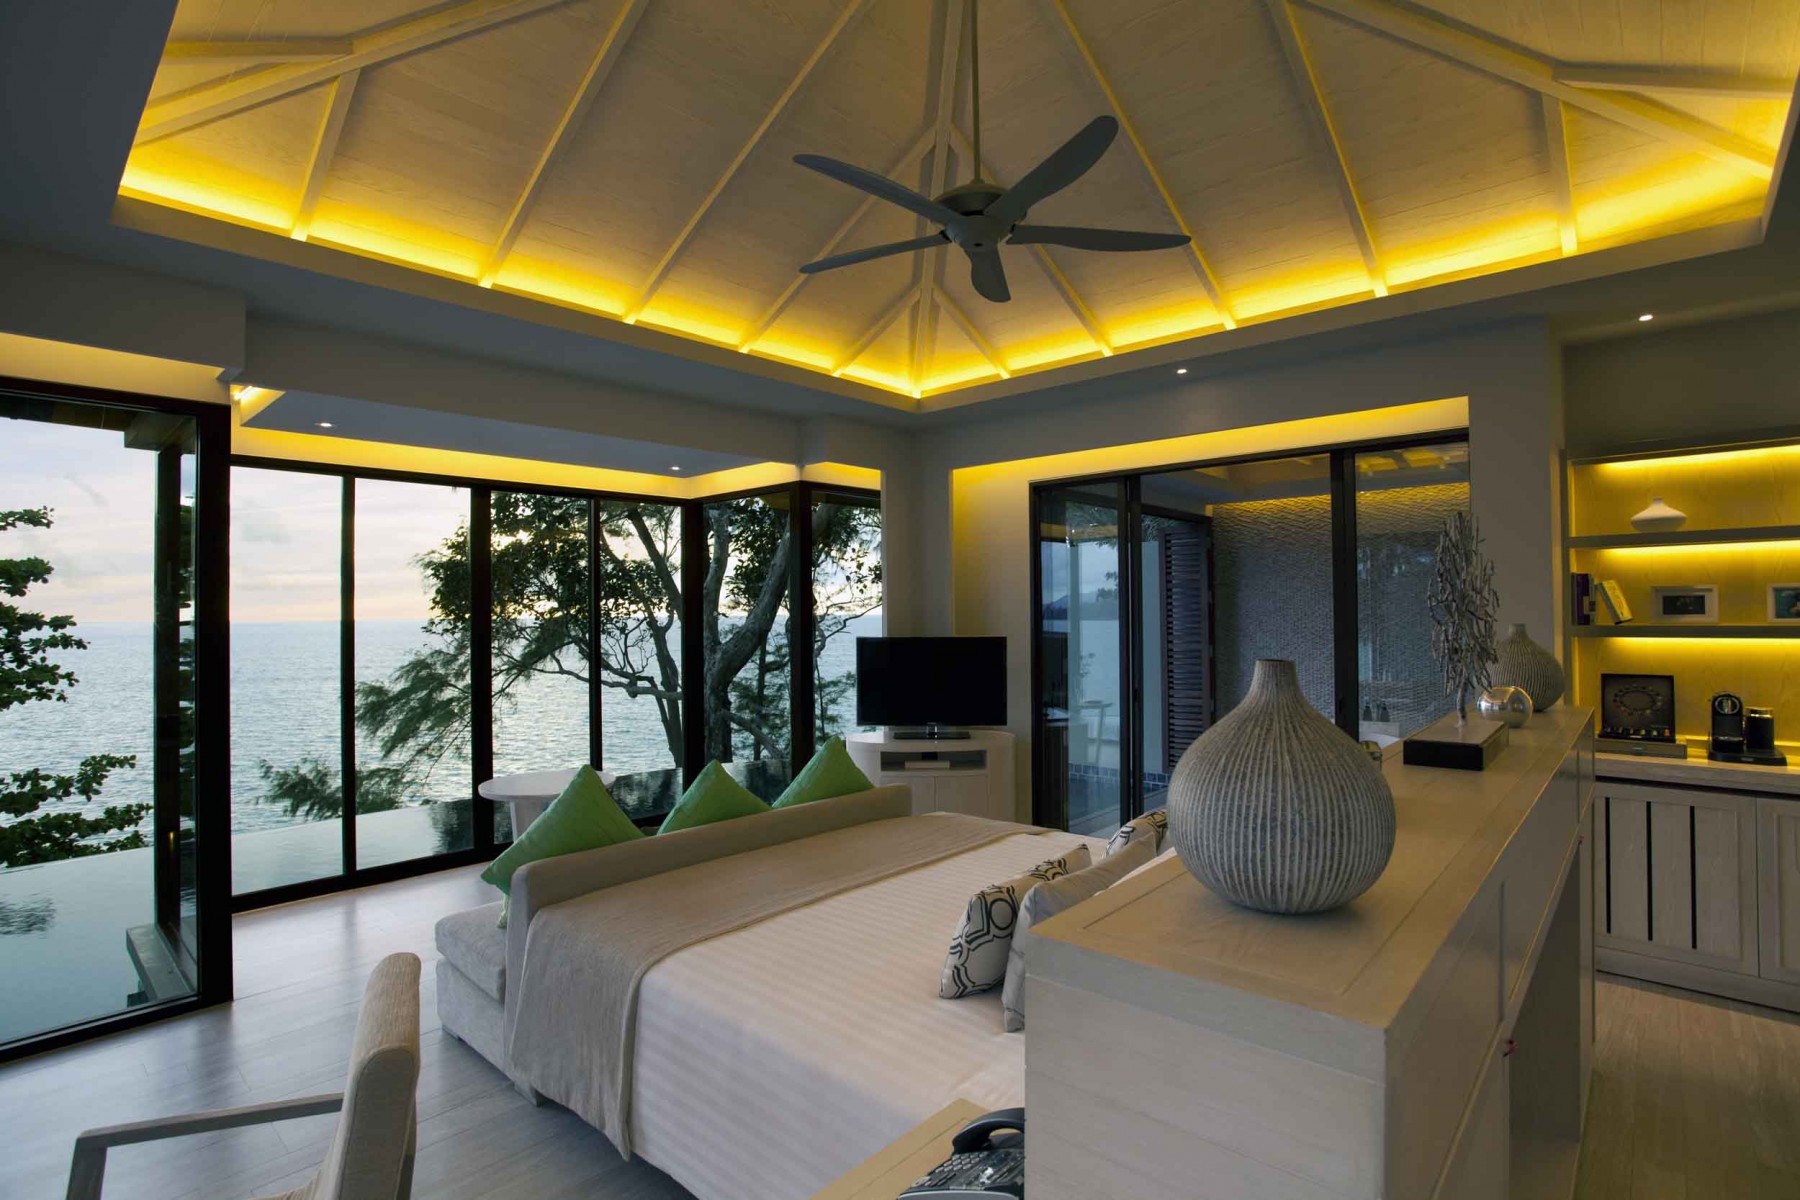 Phuket resort with private pool villa